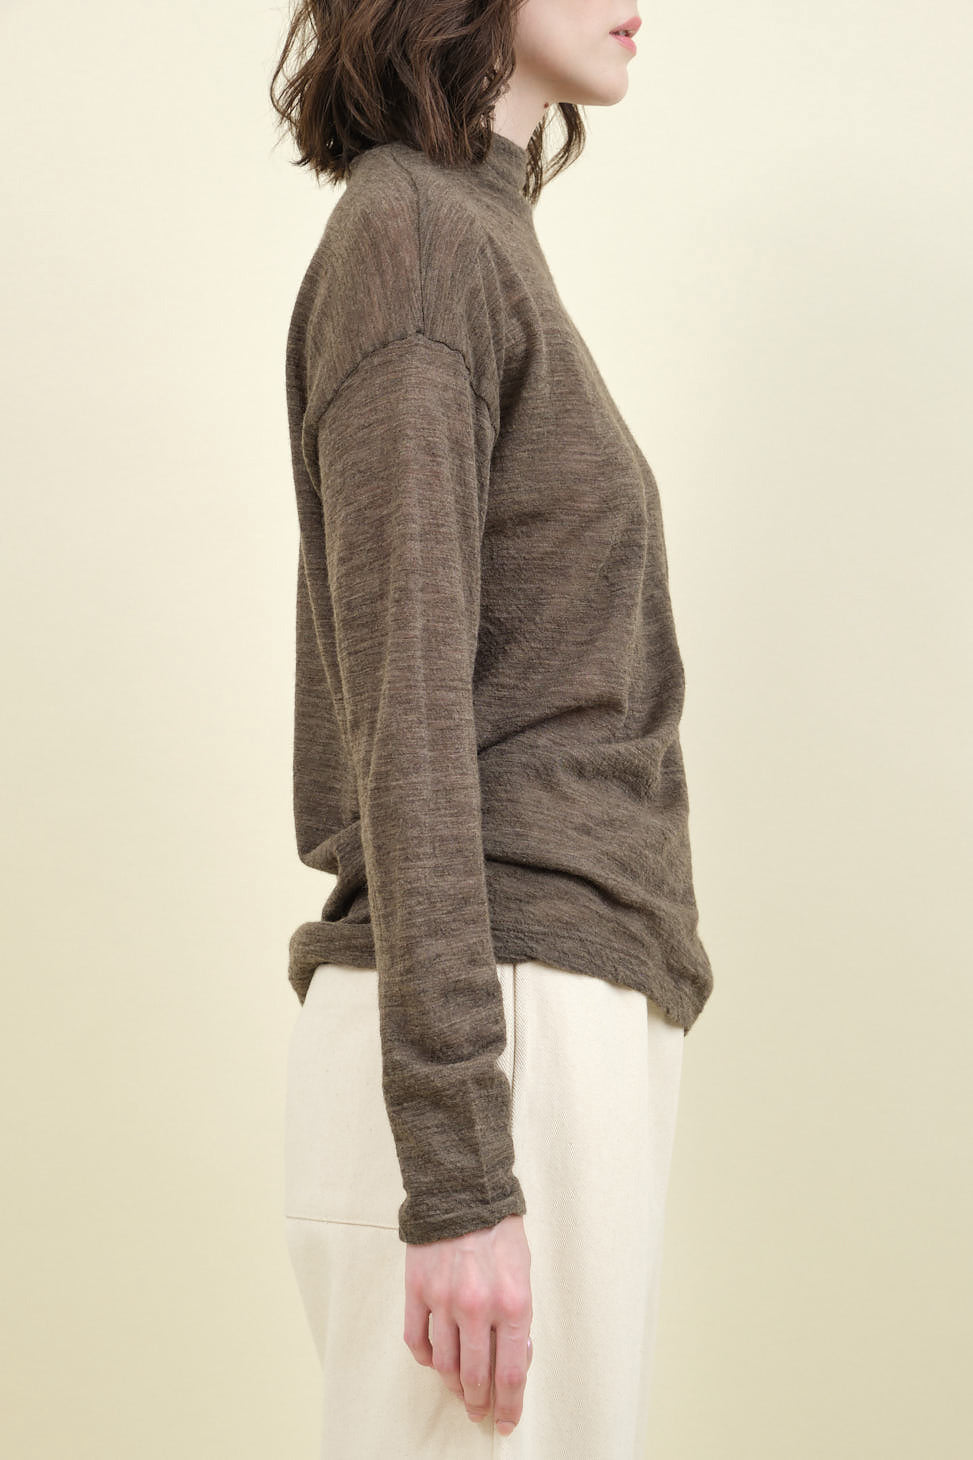 Wool Gauze High Neck Long Sleeve Pullover in Beige